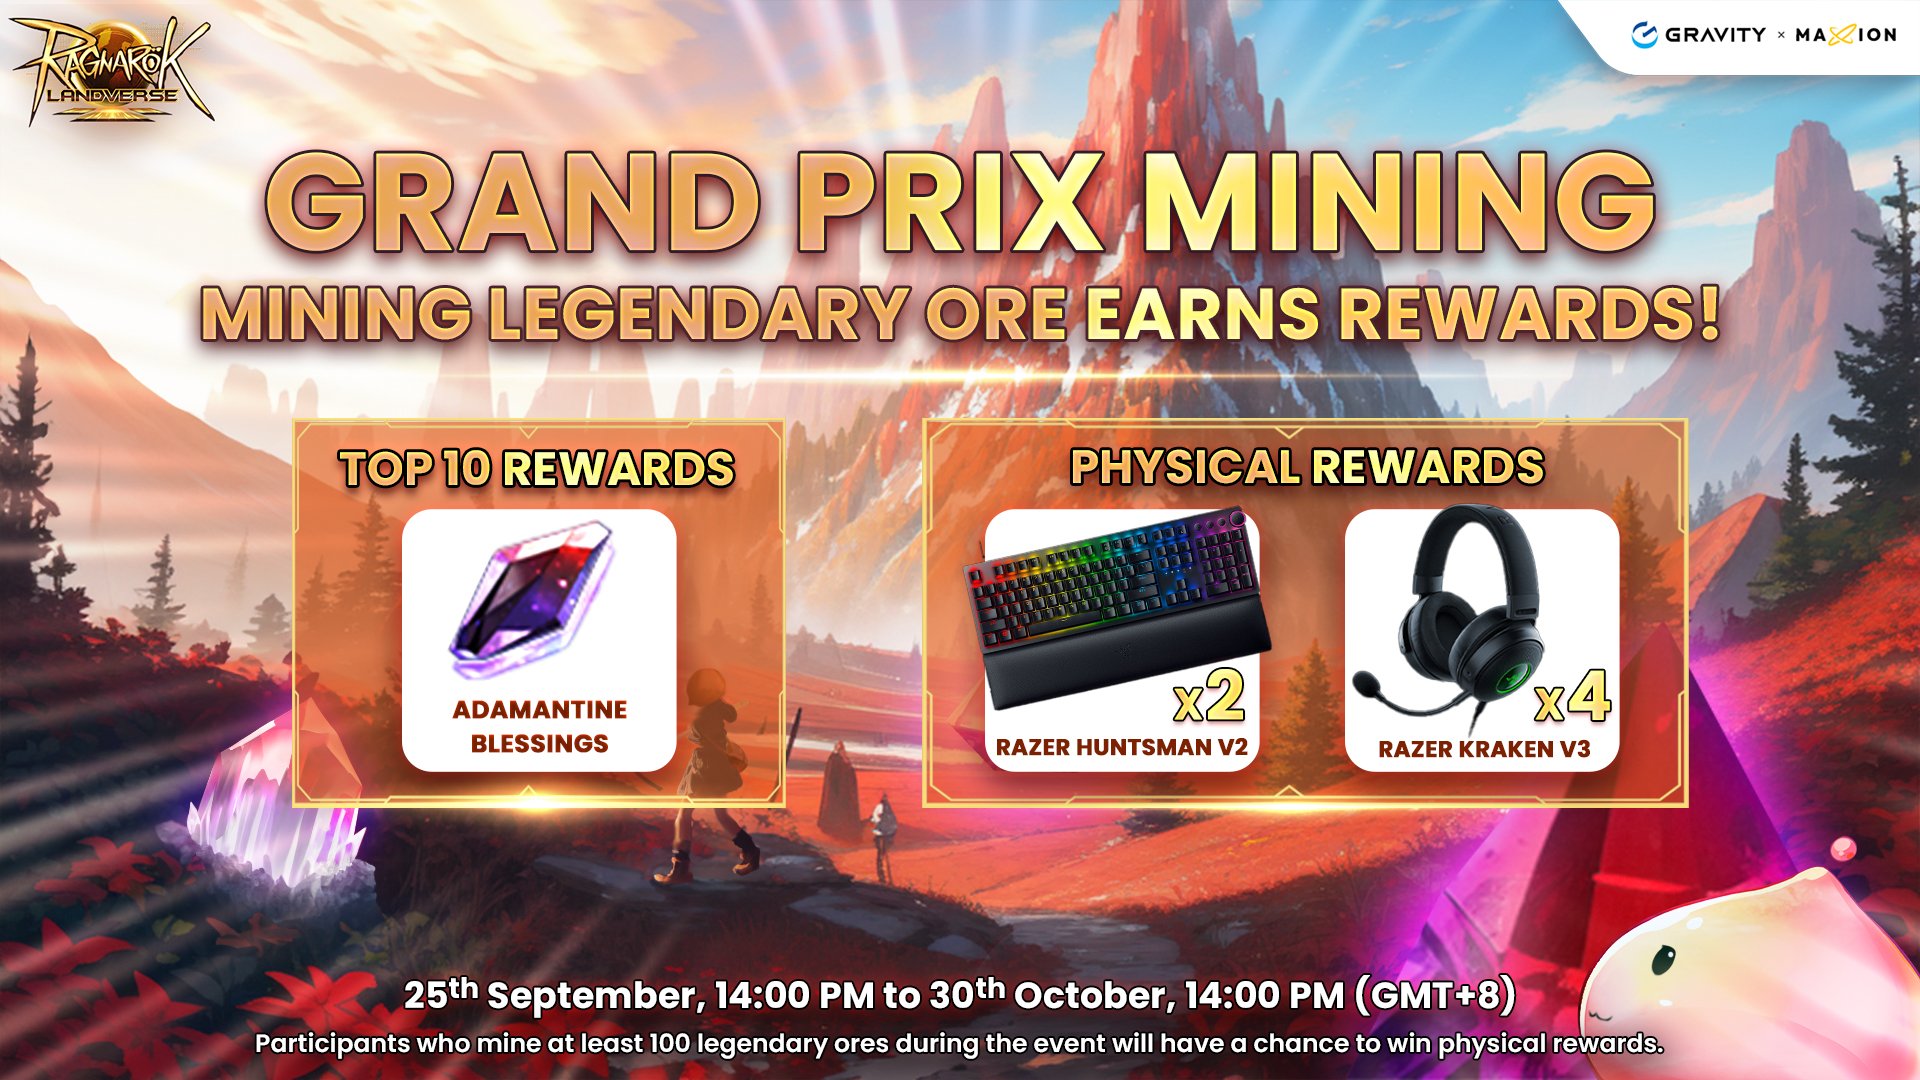 Grand Prix Mining Mining Legendary Ore Earns Rewards!